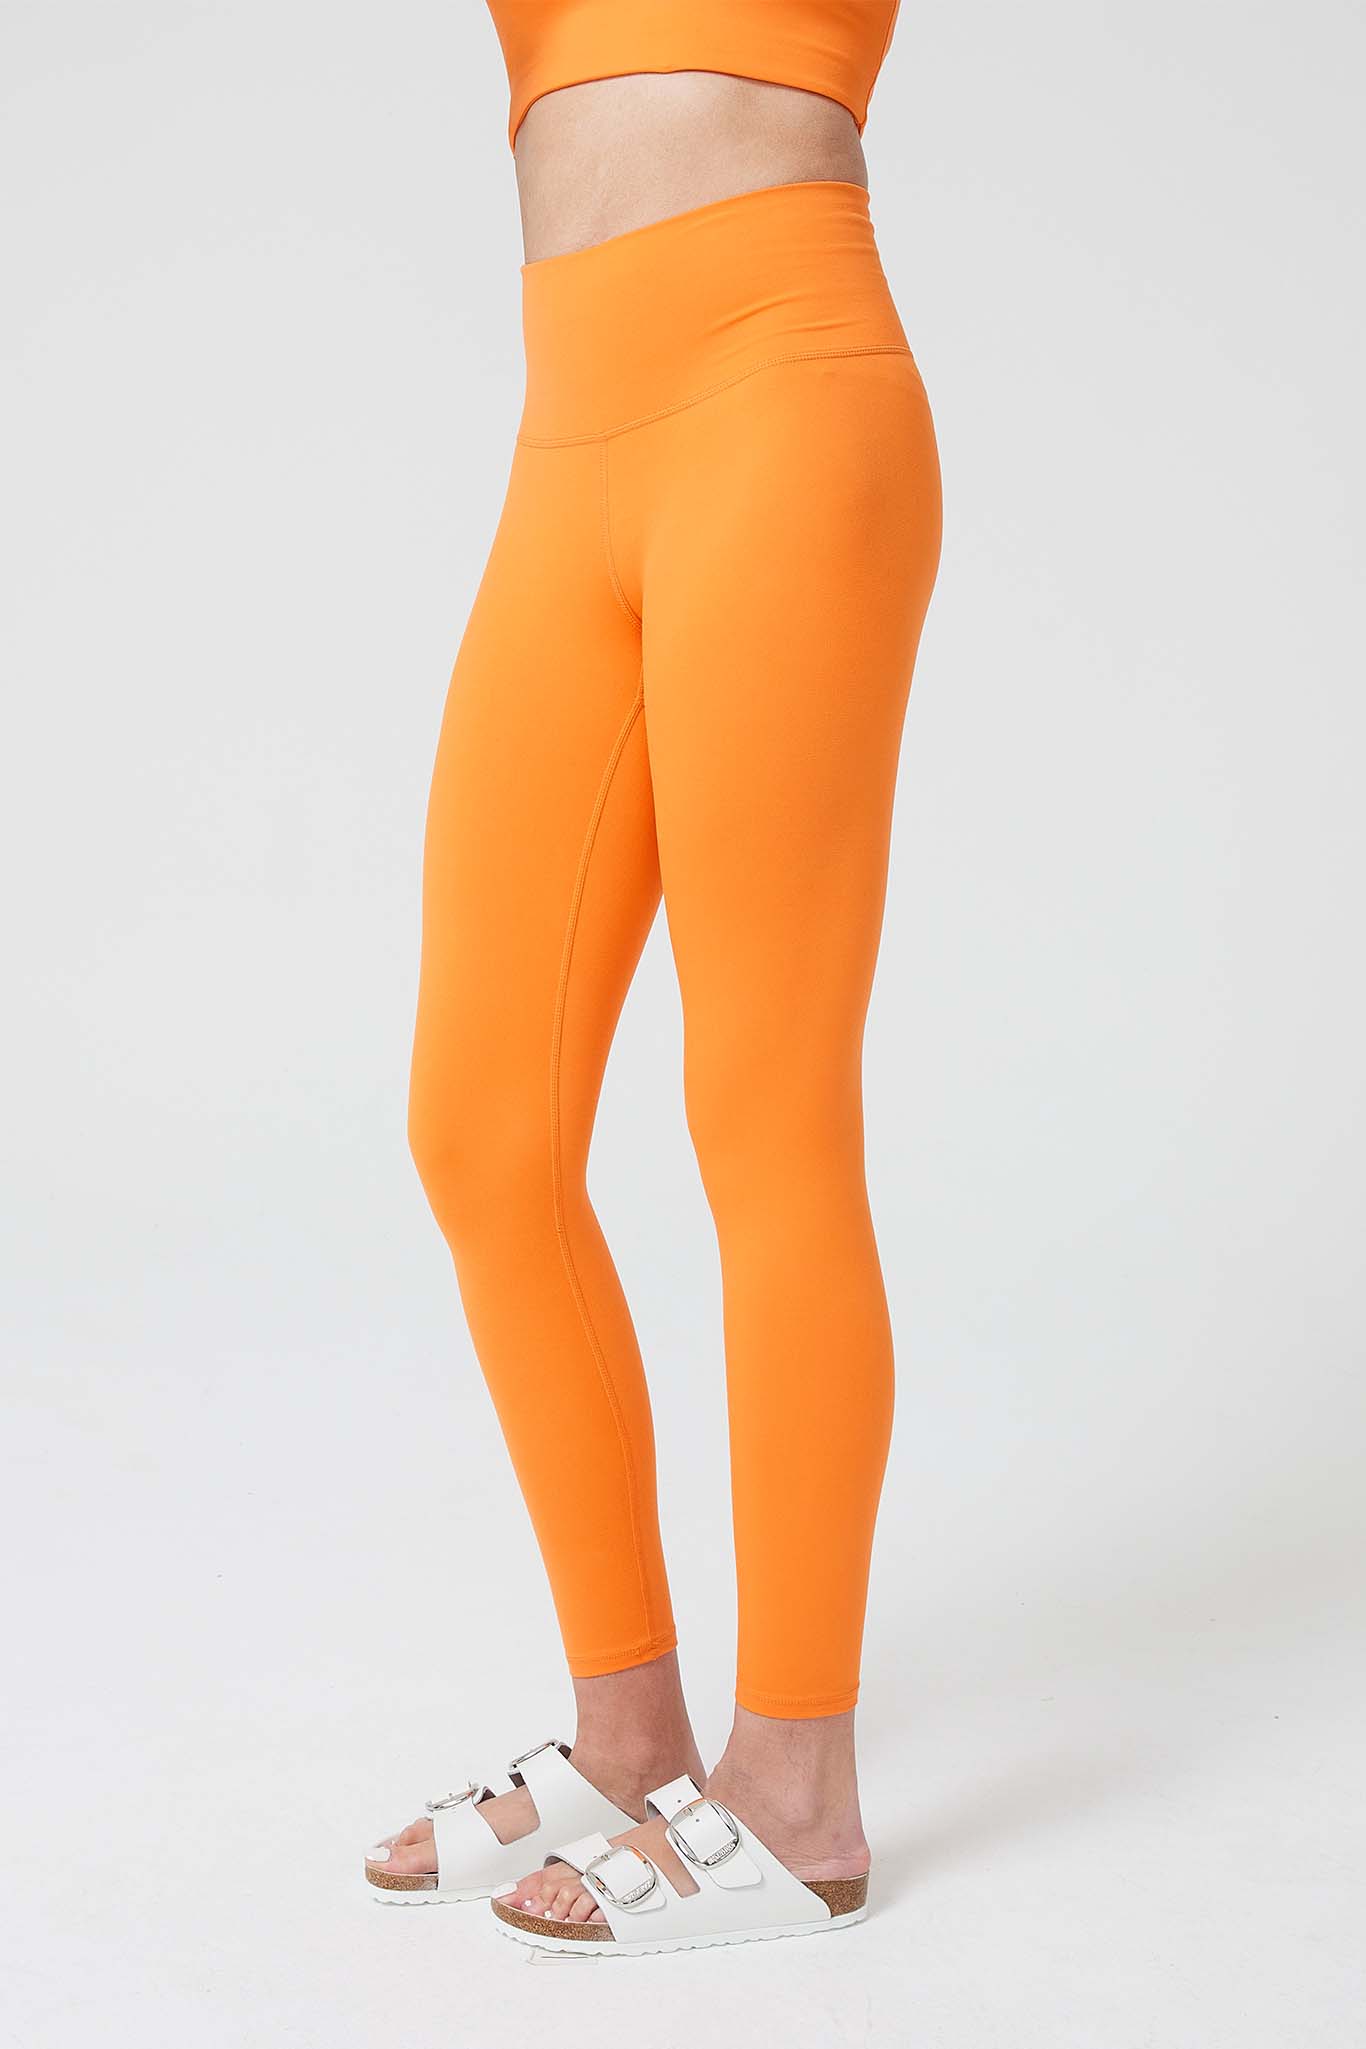 Women's Highwaist Orange Impression Leggings - Carpatree